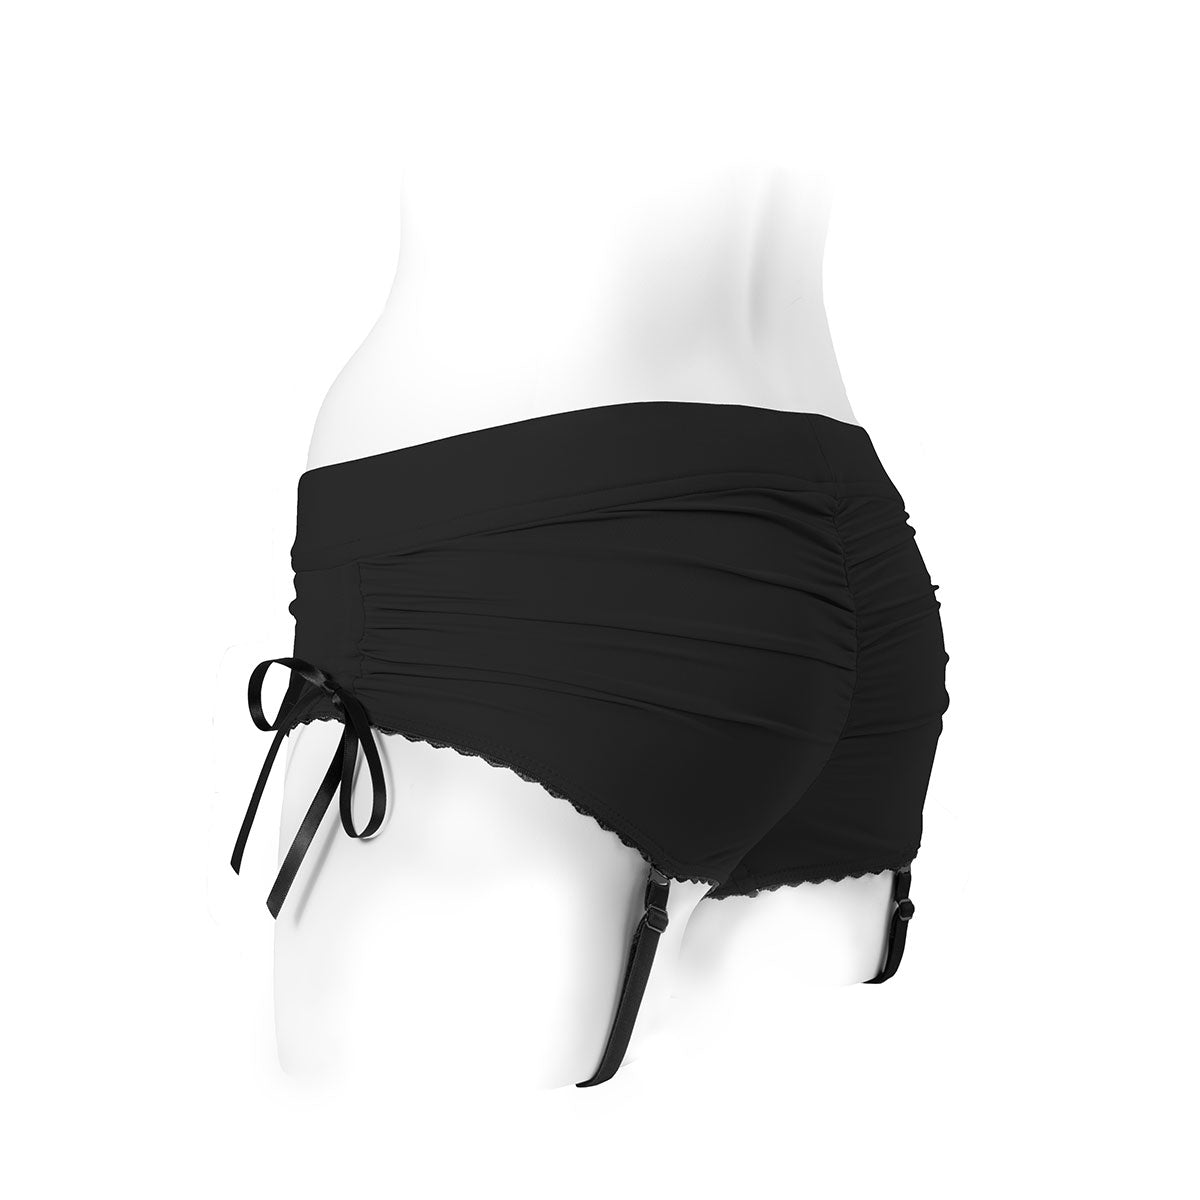 SpareParts Sasha Harness Black-Black Nylon - 3X Intimates Adult Boutique